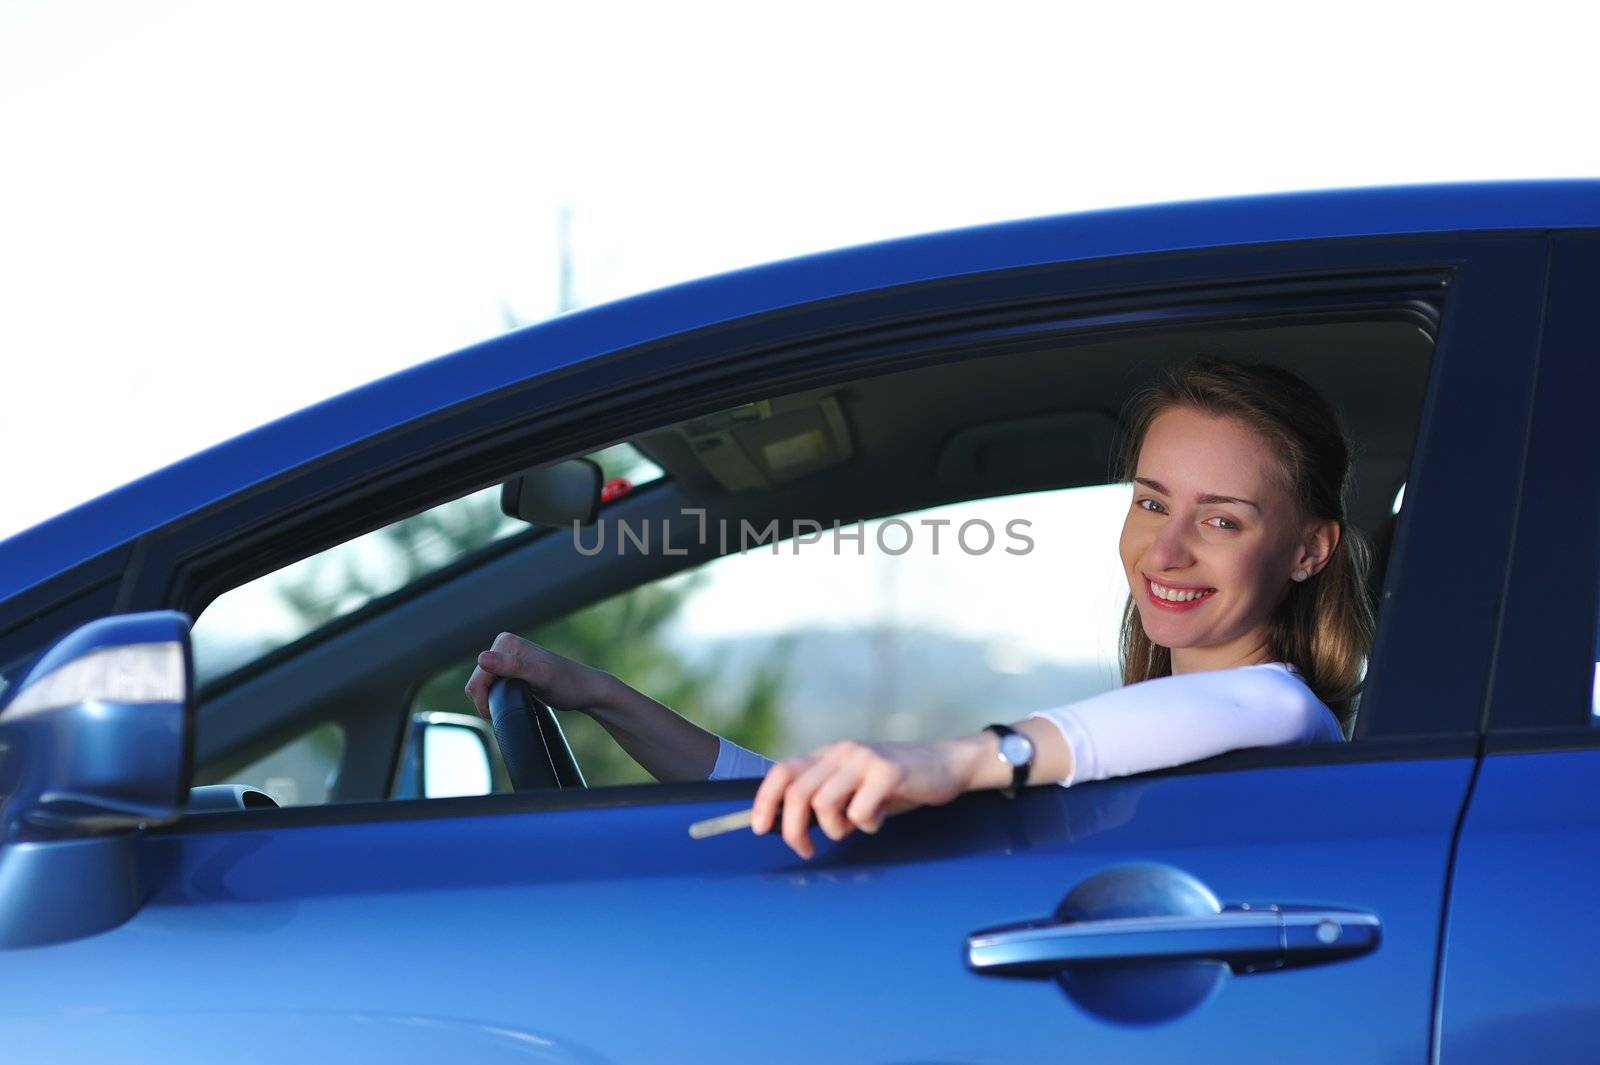 Happy woman in new blue car